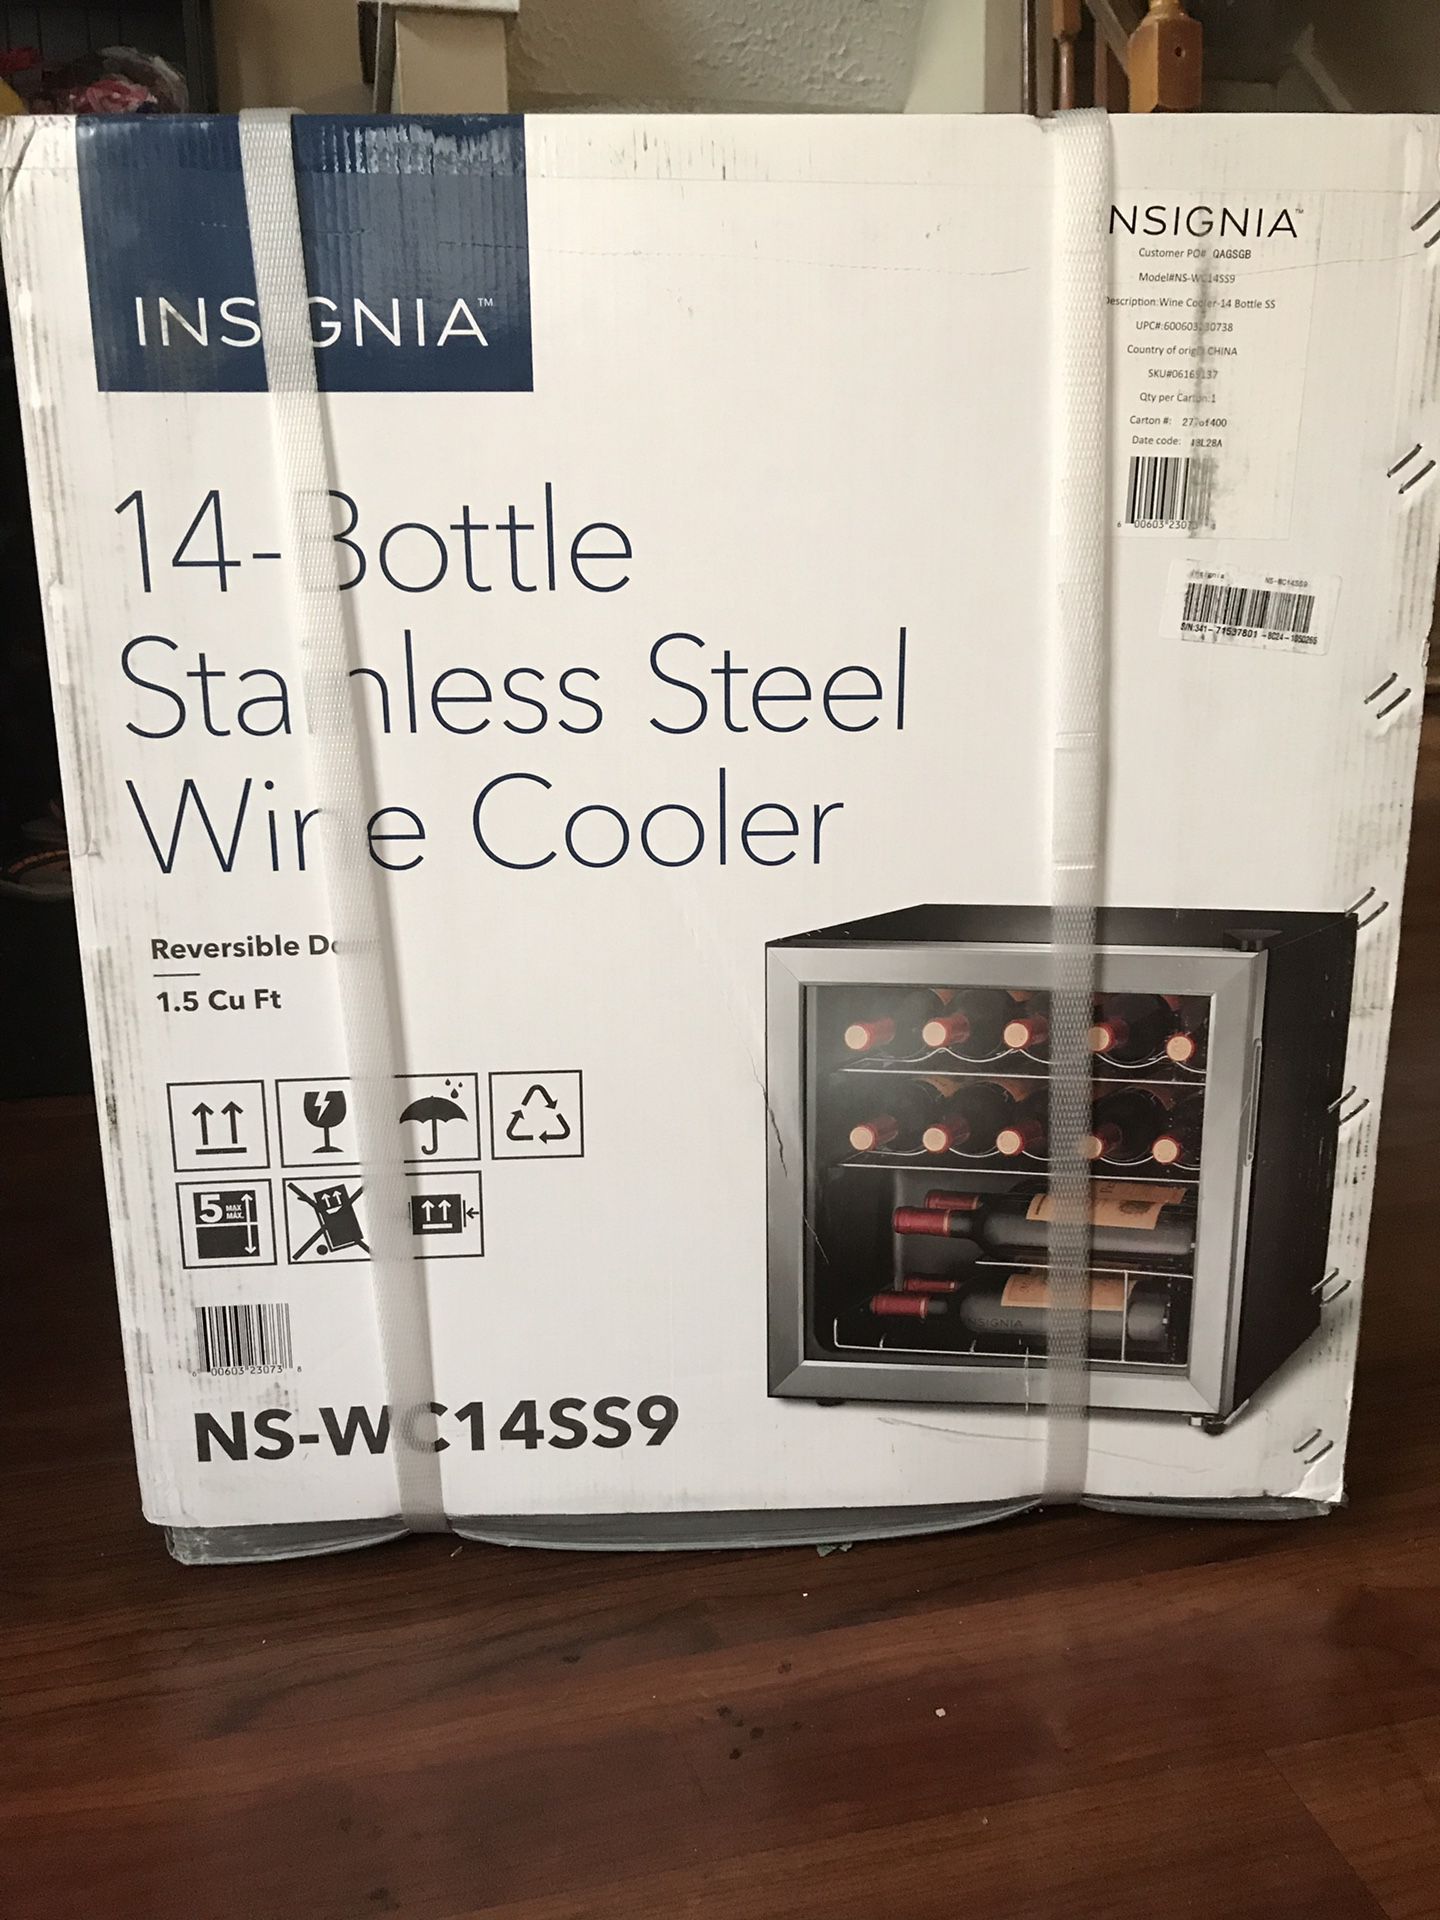 Brand new 14 bottle stainless steel wine cooler